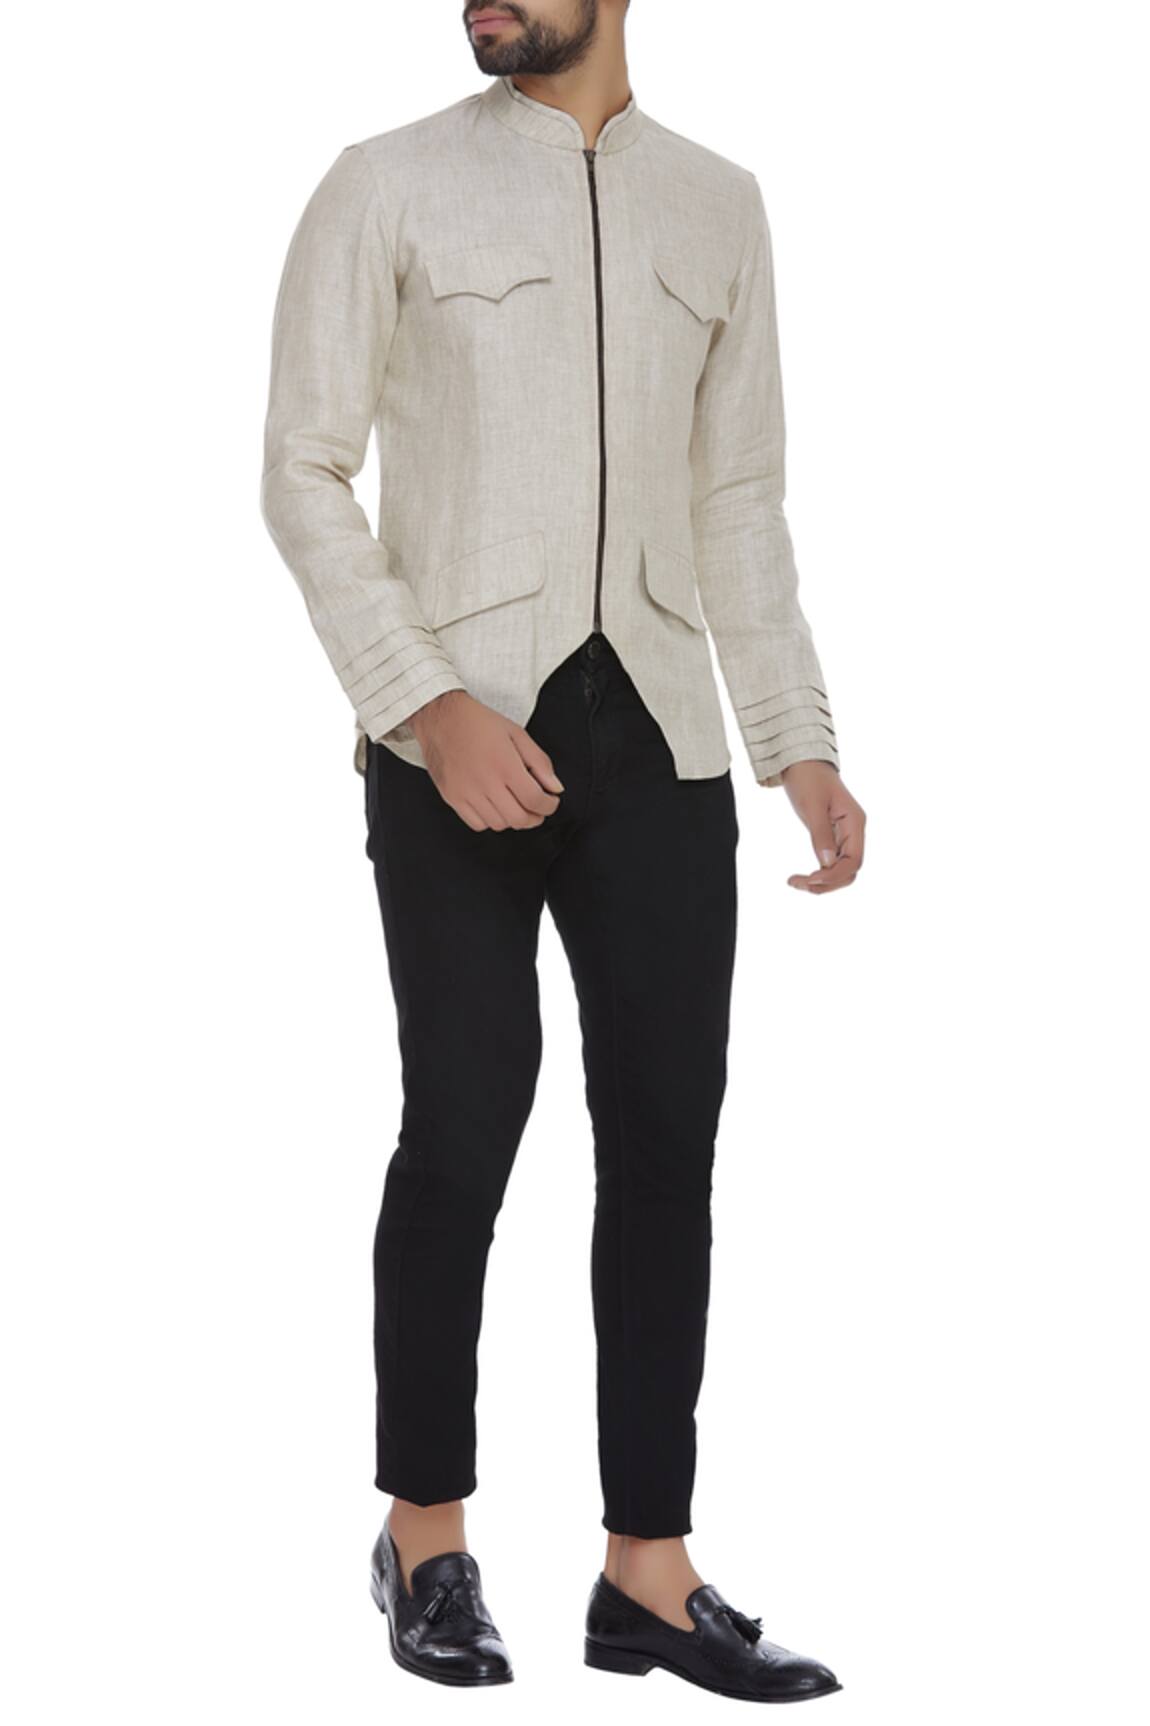 Barkha 'N' Sonzal Zippered jacket with pockets